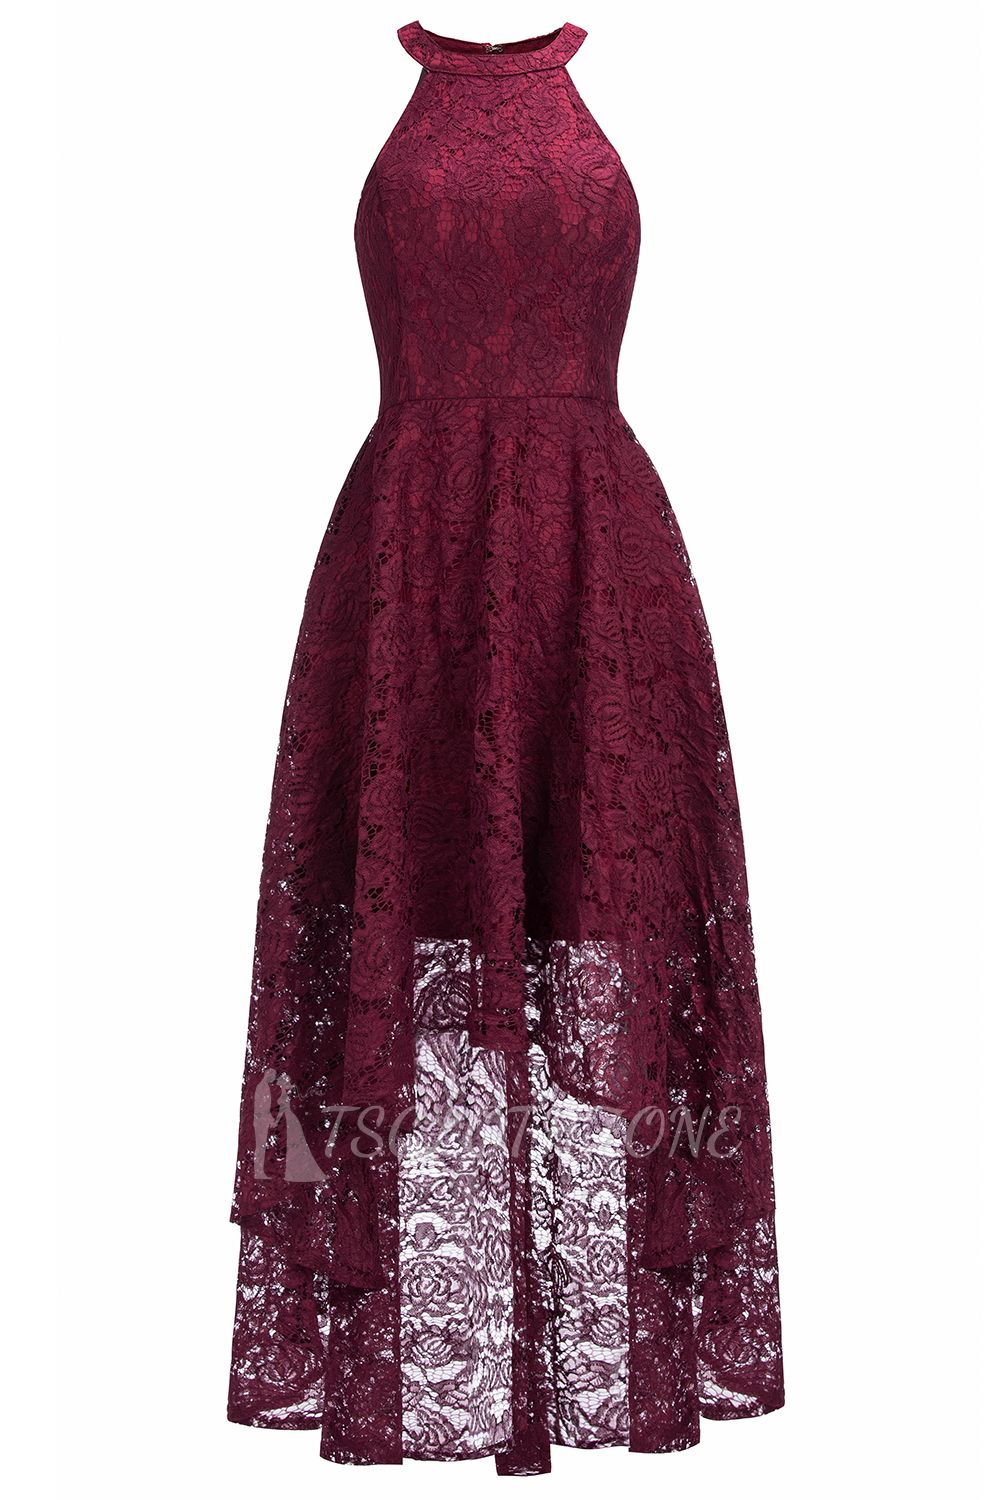 Halter Sleeveless Sheath Asymmetrical Burgundy Lace Dresses